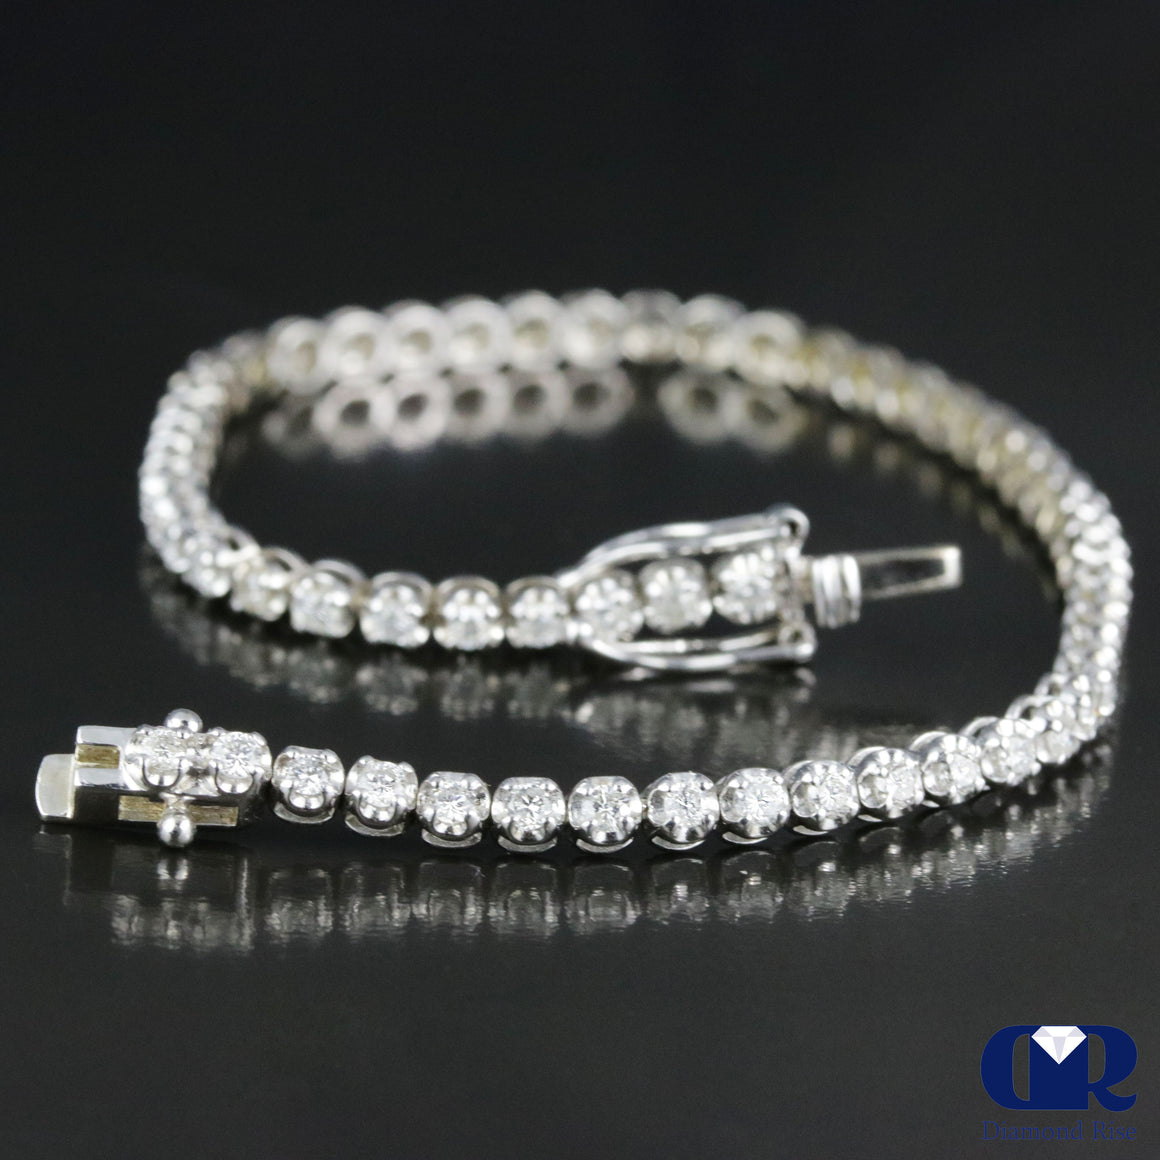 1.75 Carat Round Cut Diamond Tennis Bracelet In 14K White Gold - Diamond Rise Jewelry